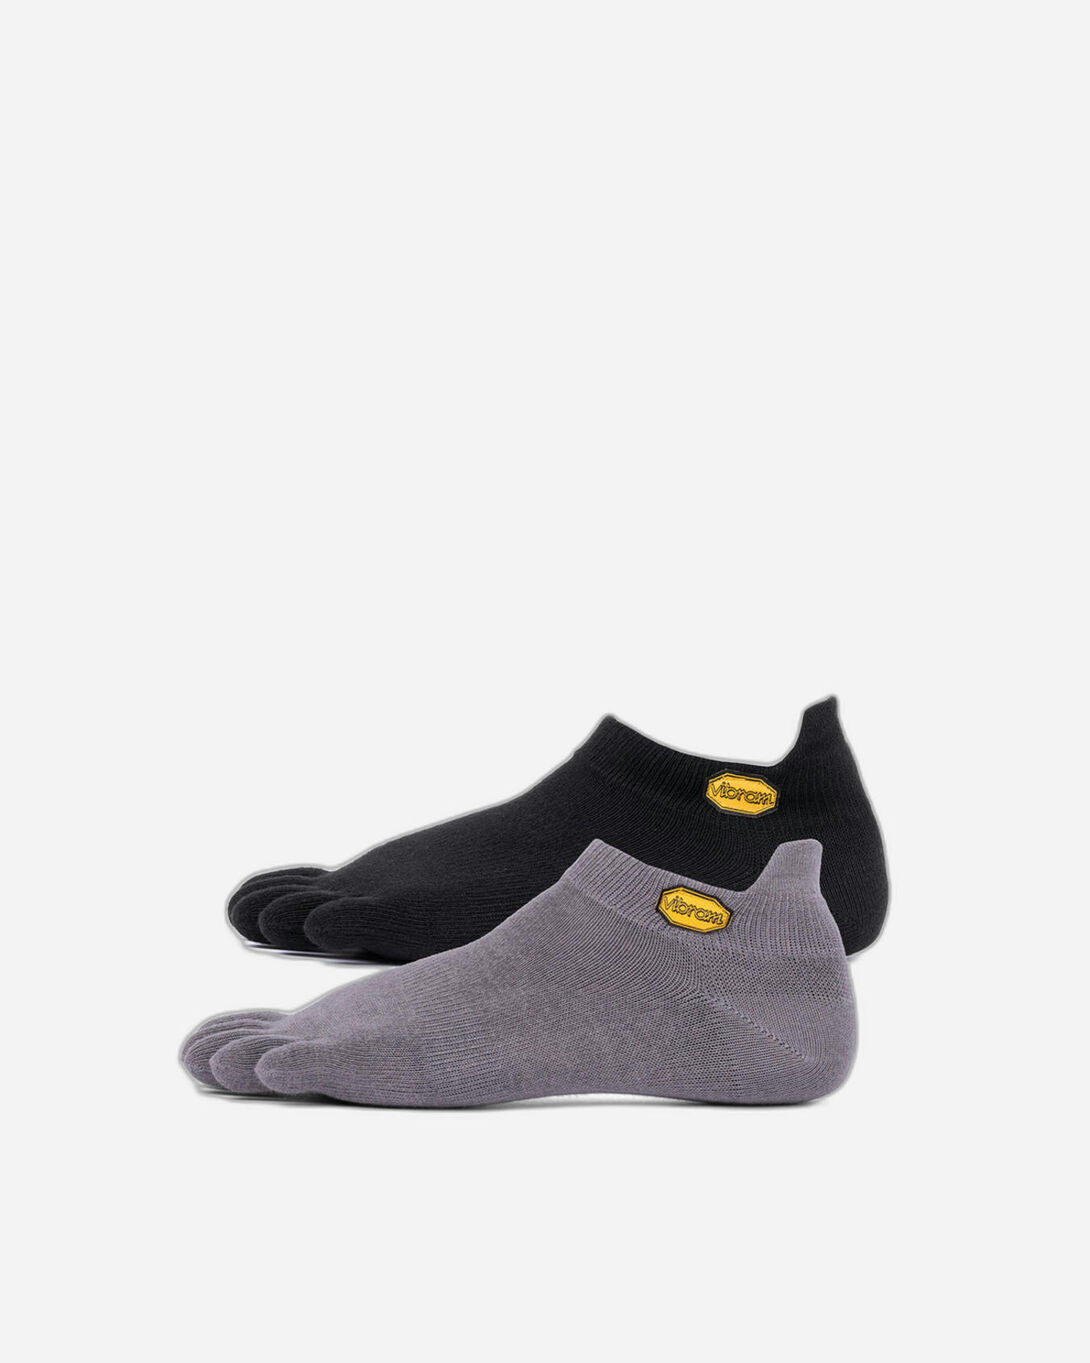 Sock Bundle – Heel & Toe Apparel